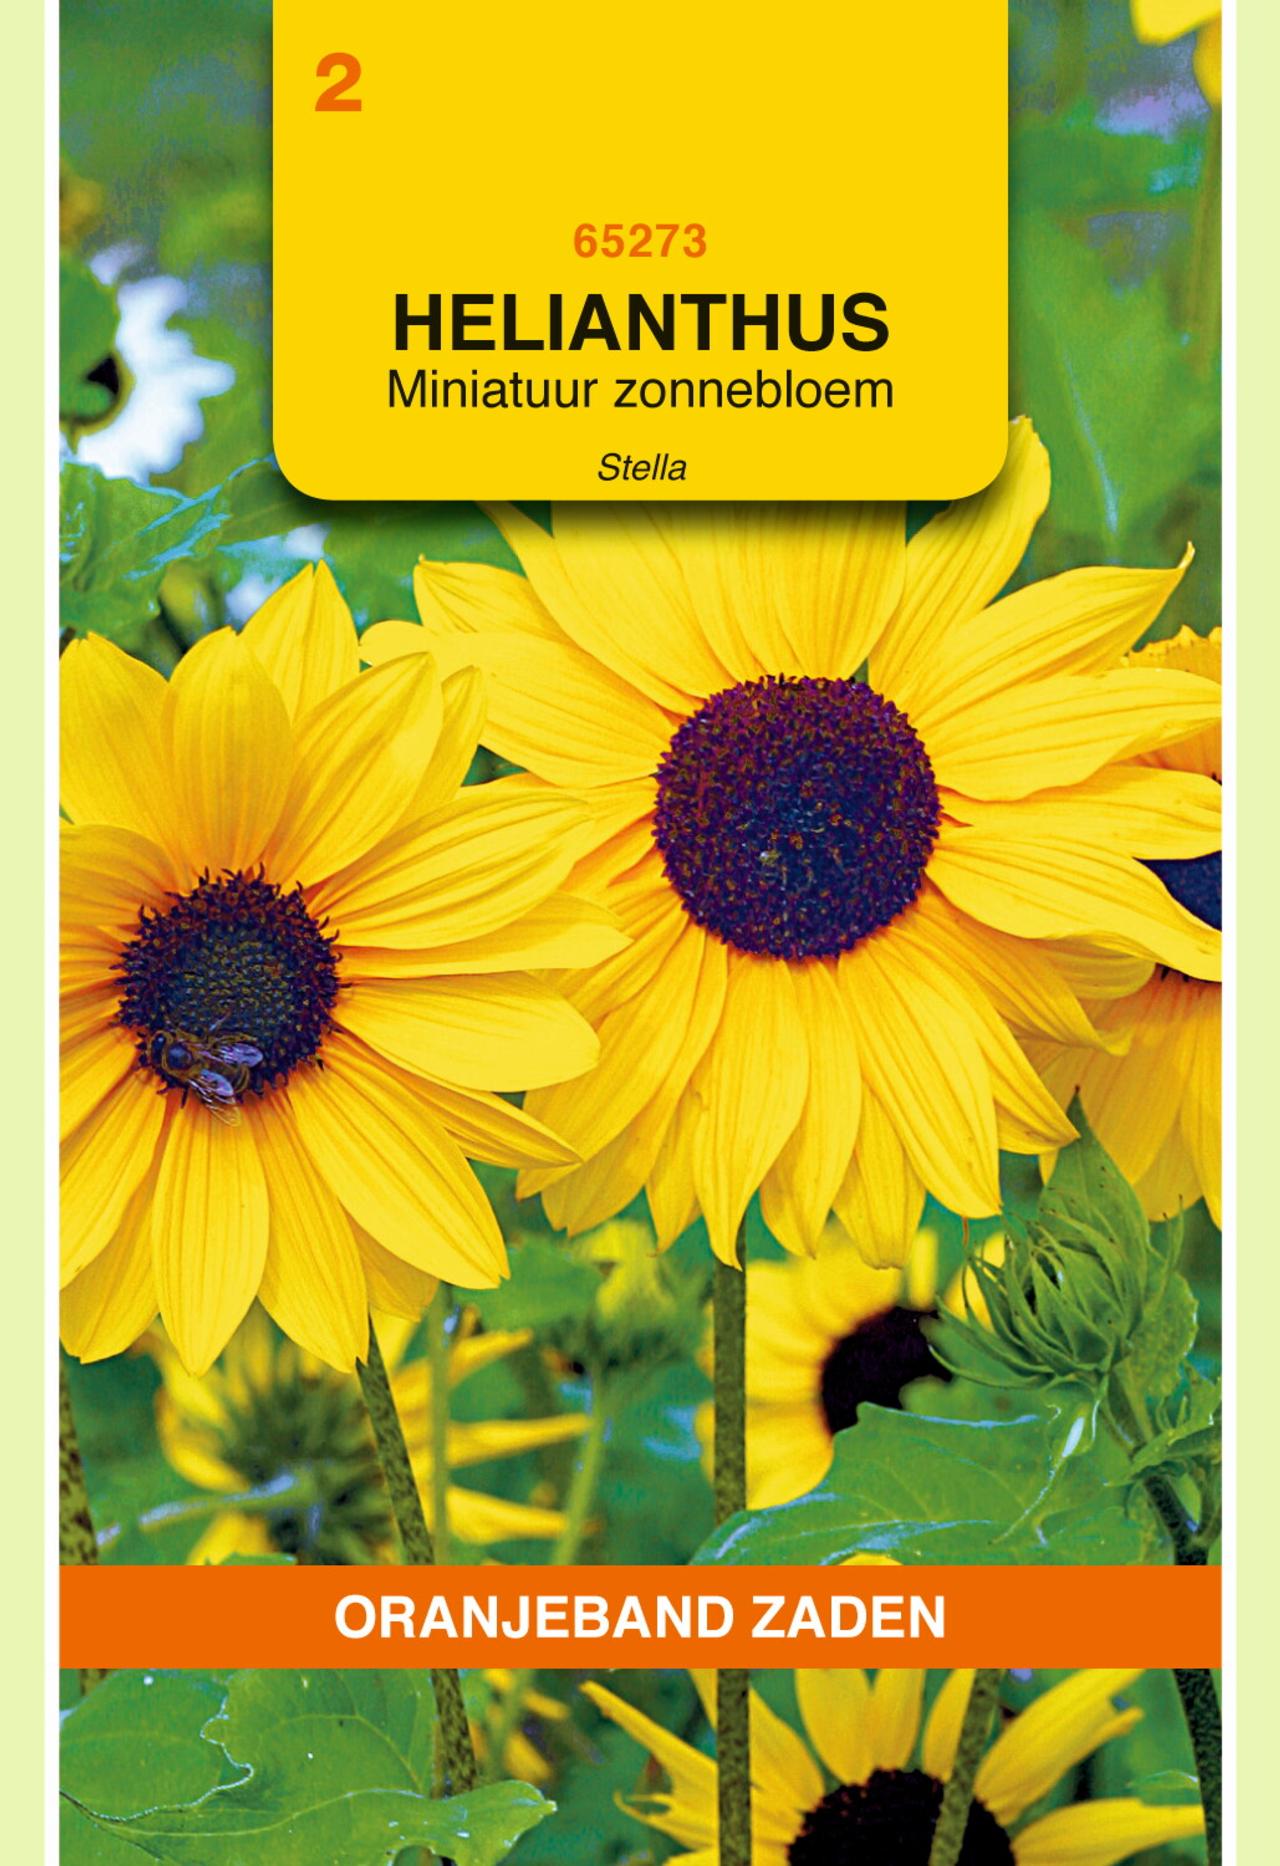 Helianthus debilis 'Stella' plant